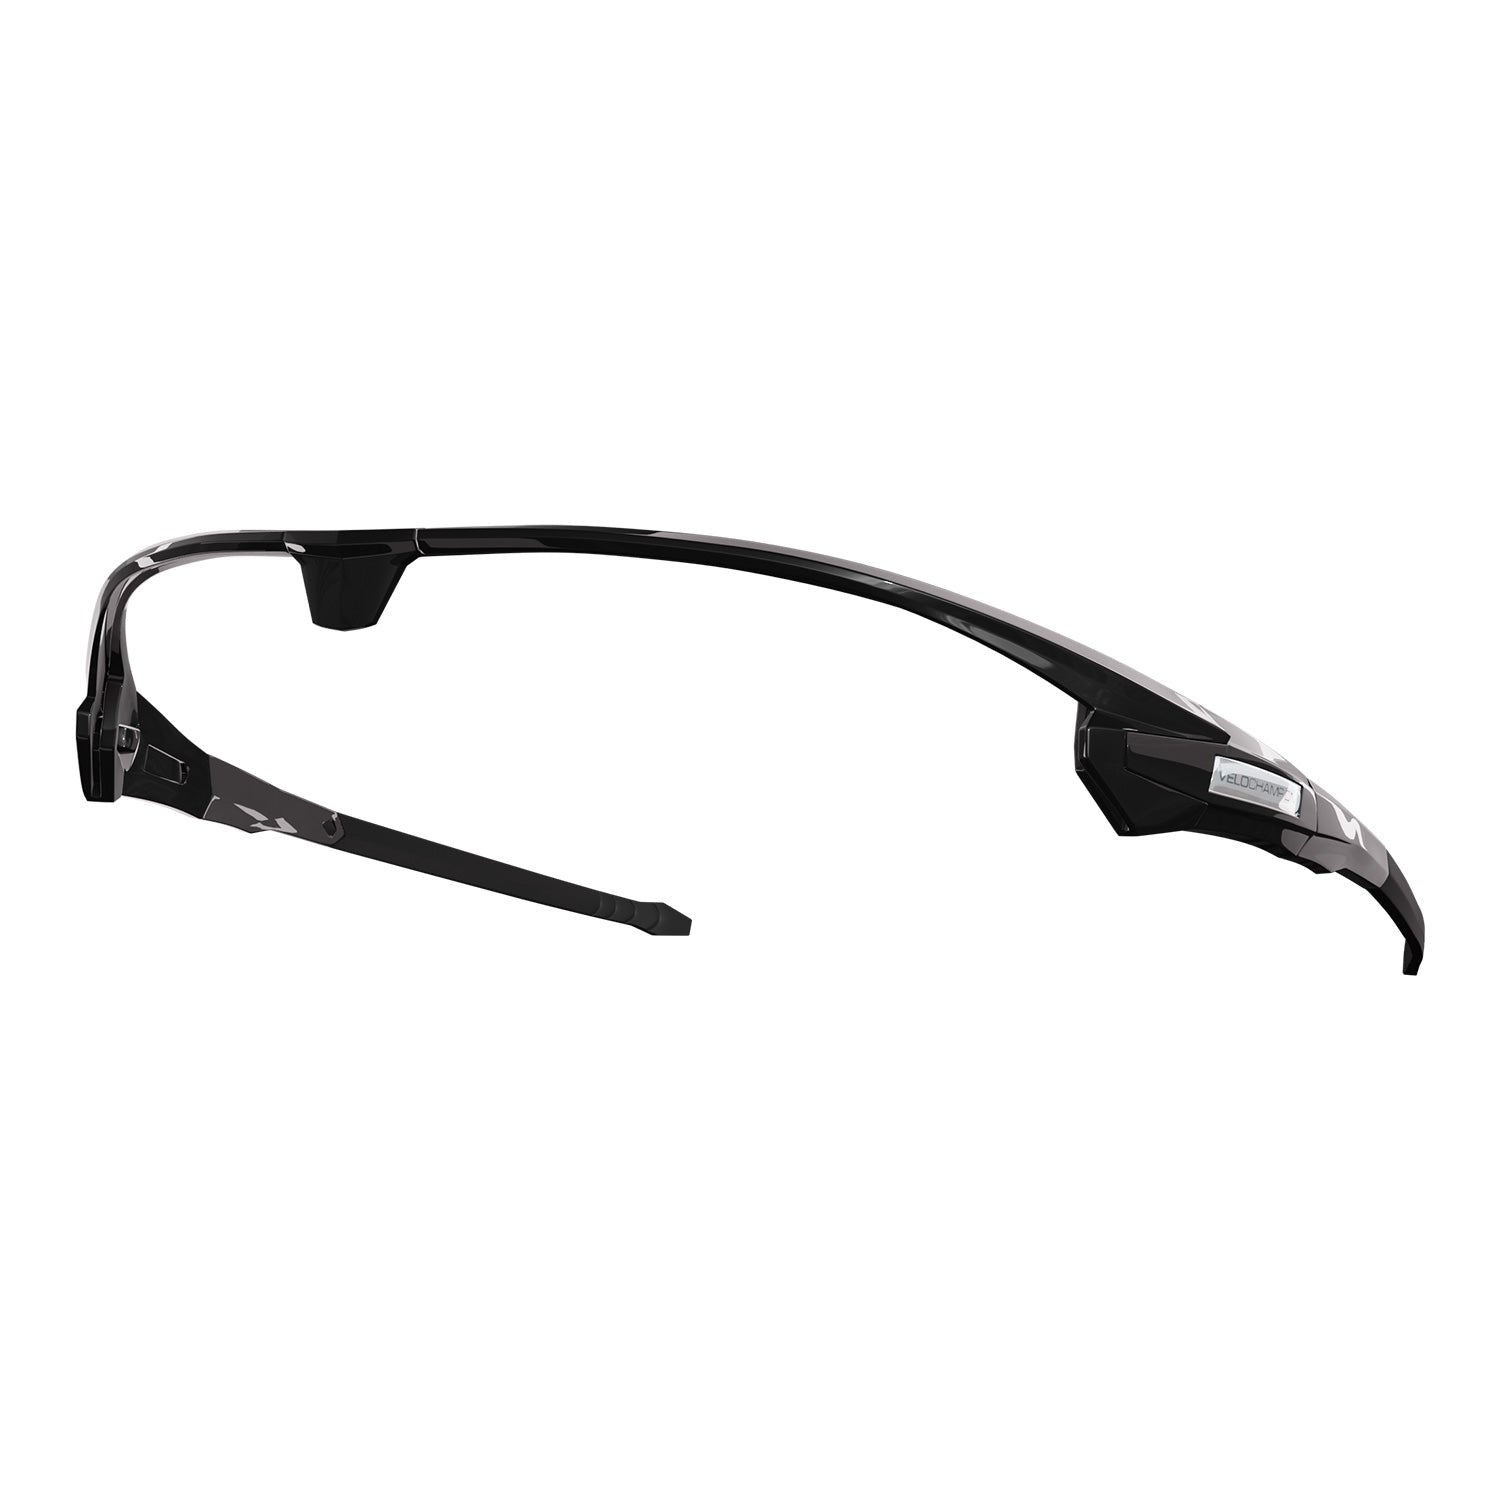 Customisable Missile cycling sunglasses black frame | VeloChampion